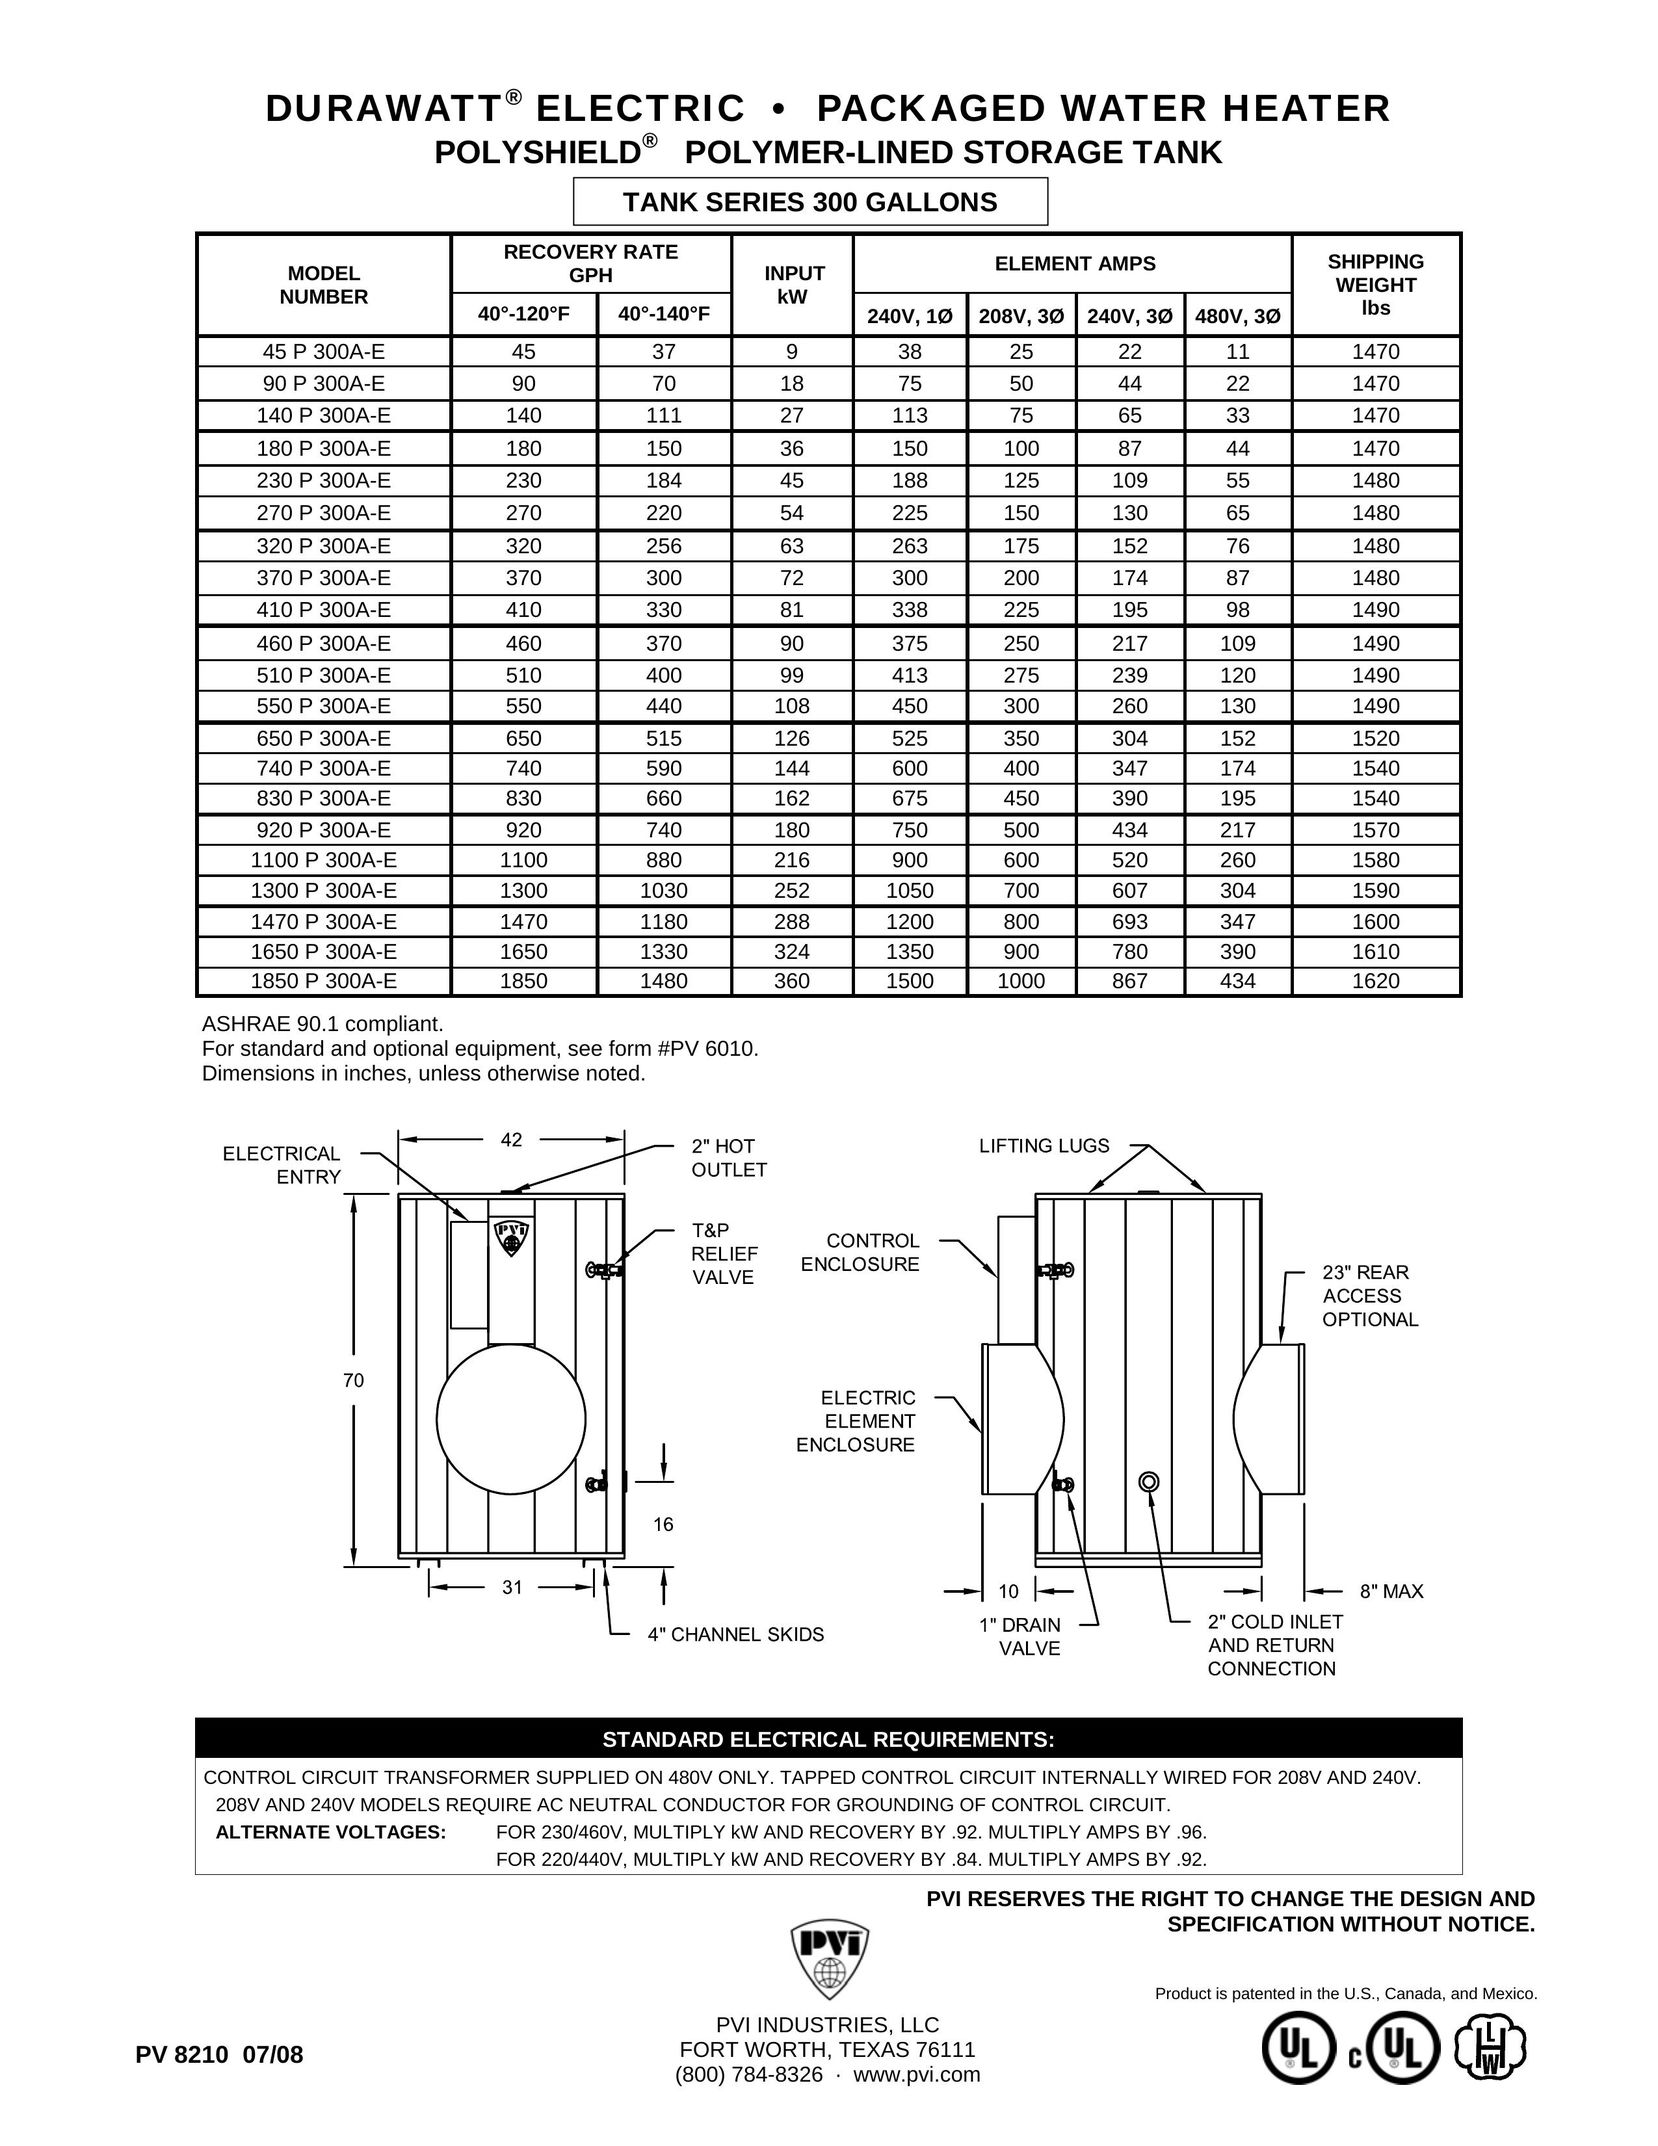 PVI Industries 180N300A-E Water Heater User Manual